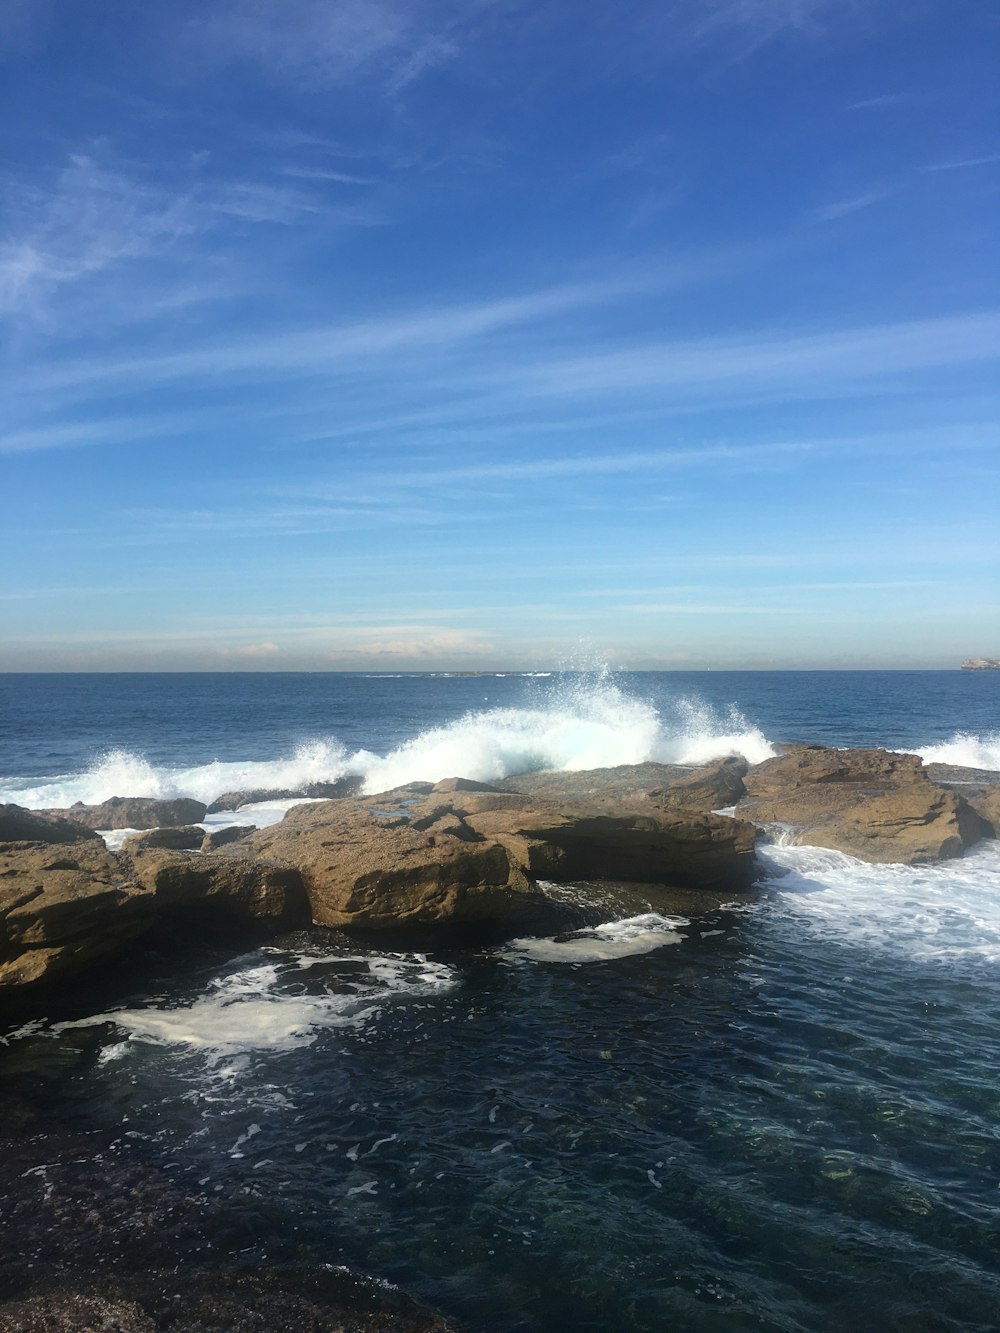 ocean waves crashing on brown rocky shore under blue sky during daytime